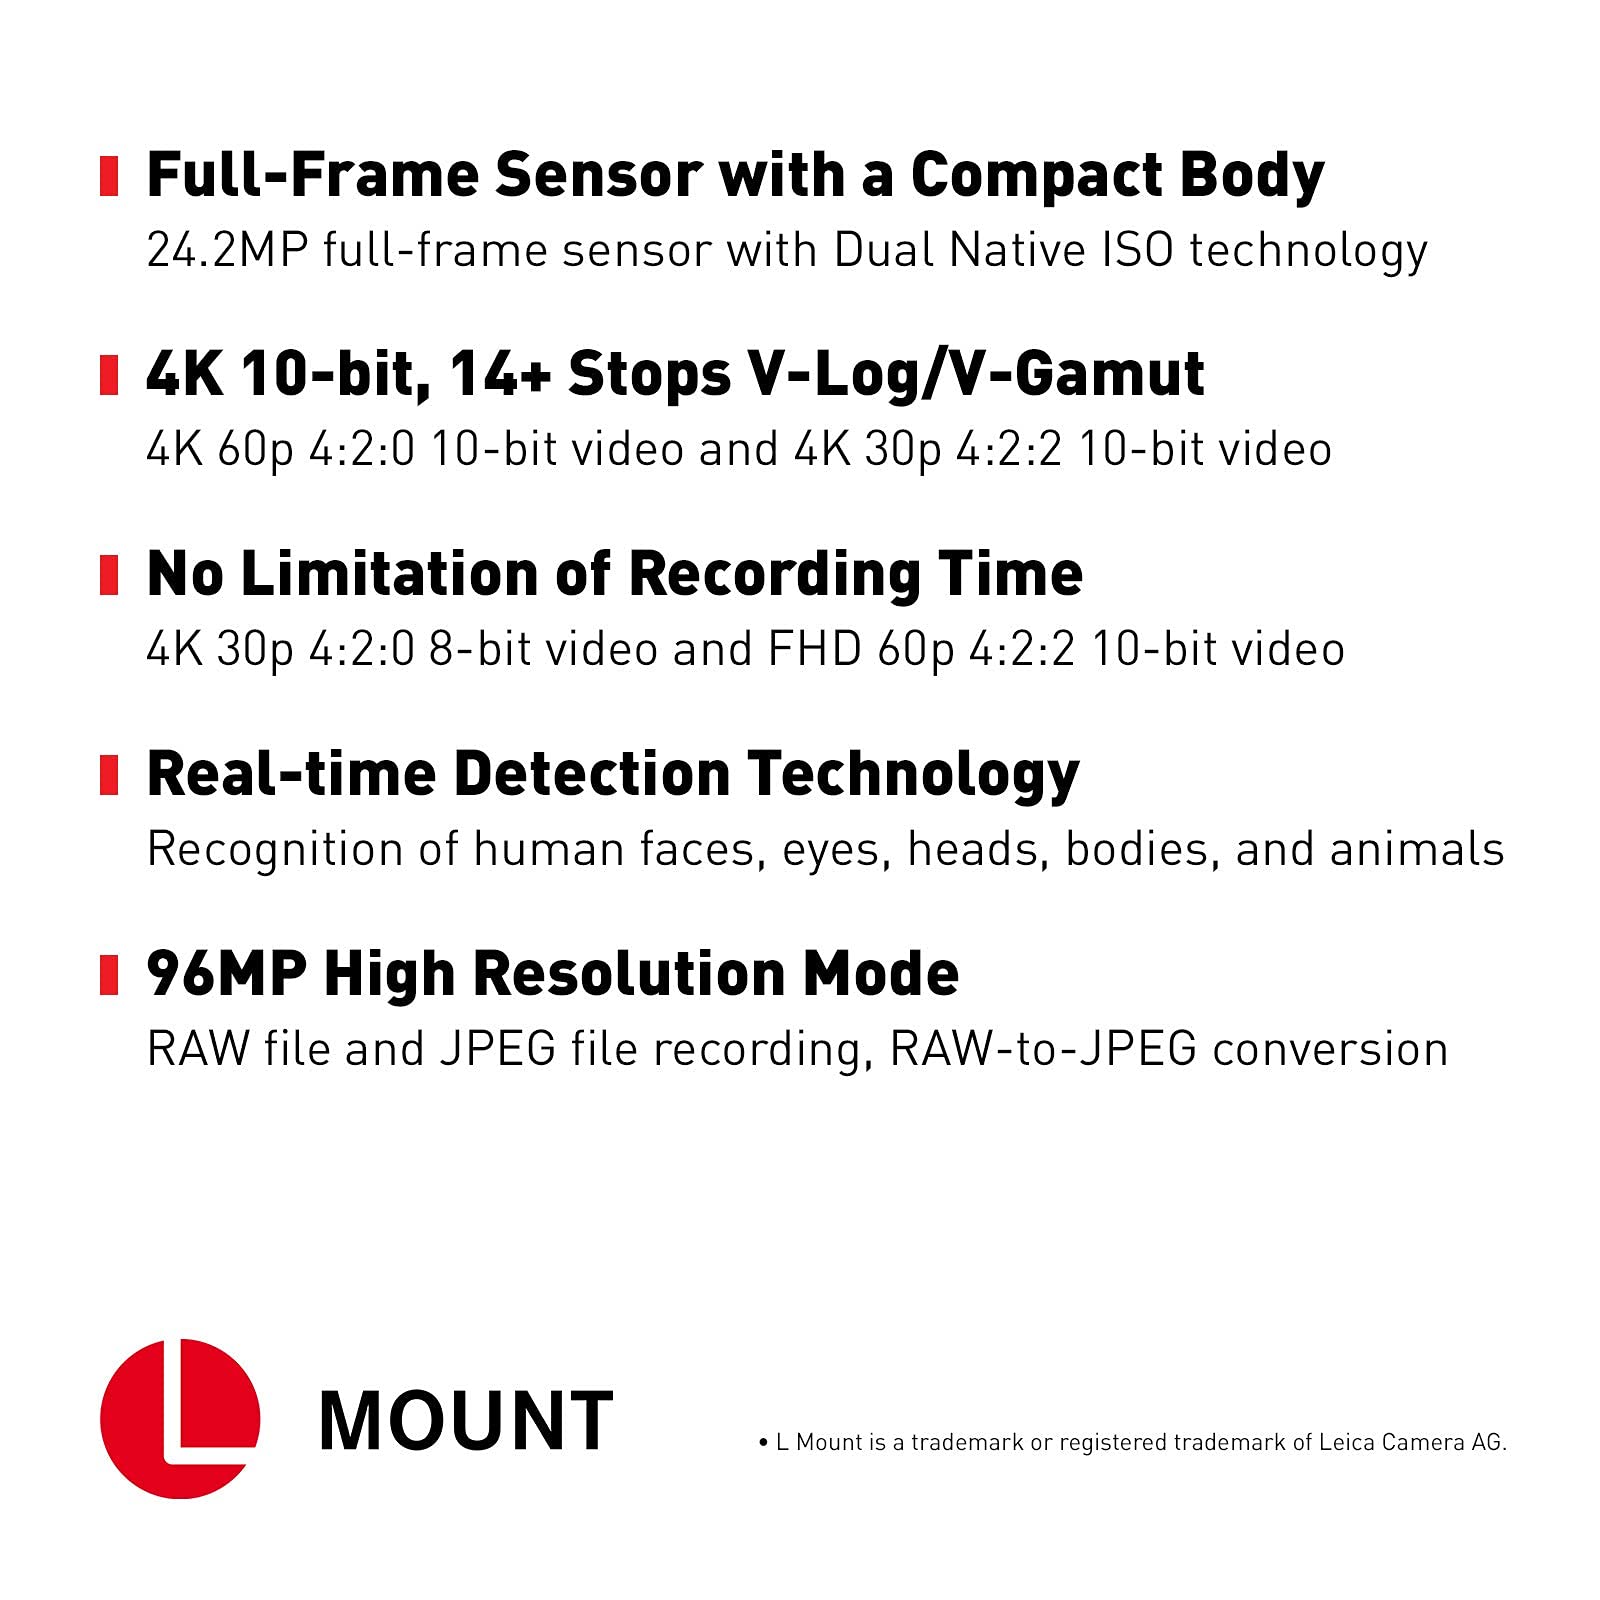 Panasonic LUMIX S5 Full Frame Mirrorless Camera, 4K 60P Video Recording with Flip Screen & WiFi, L-Mount, 5-Axis Dual I.S, DC-S5BODY (Black) (Renewed)